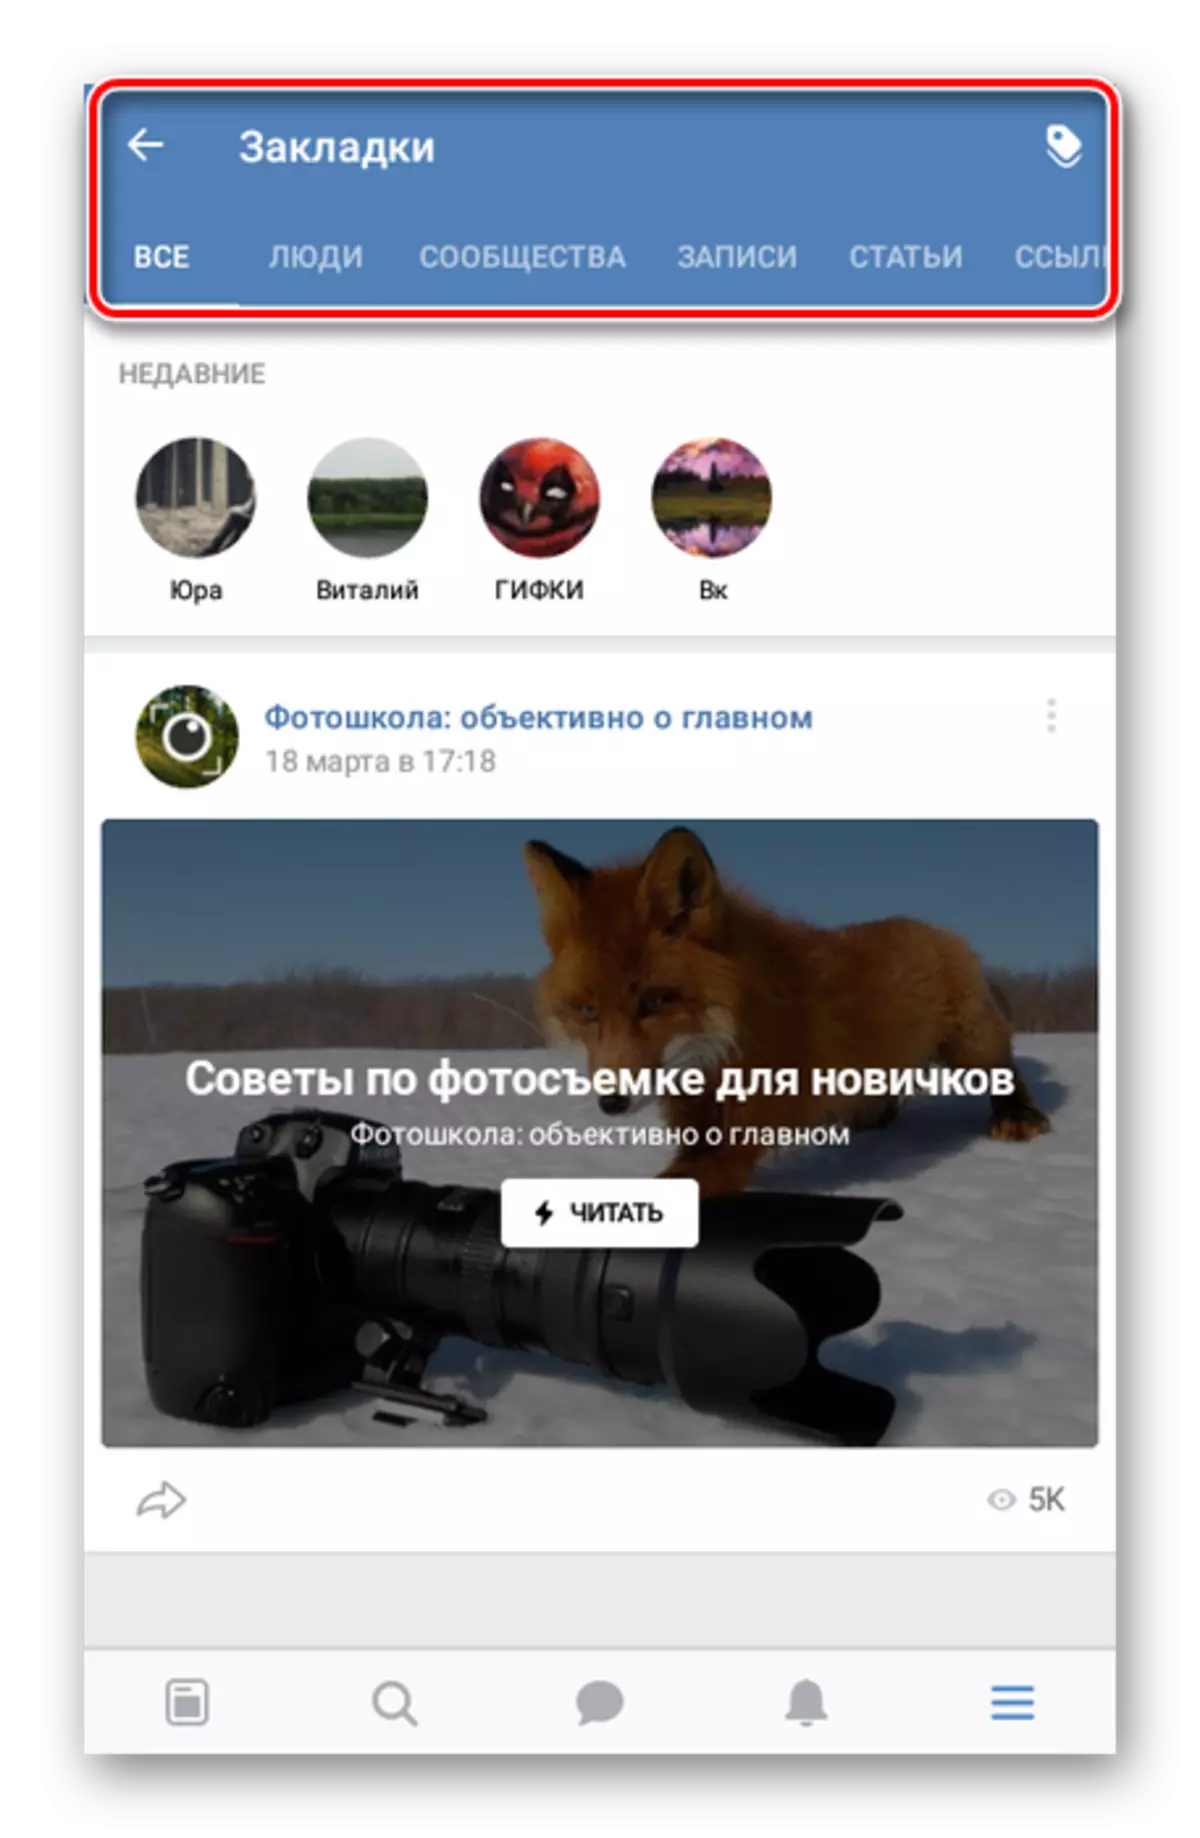 Vkontakte ਐਪਲੀਕੇਸ਼ਨ ਵਿੱਚ ਬੁੱਕਮਾਰਕ ਸੂਚੀ ਵੇਖੋ